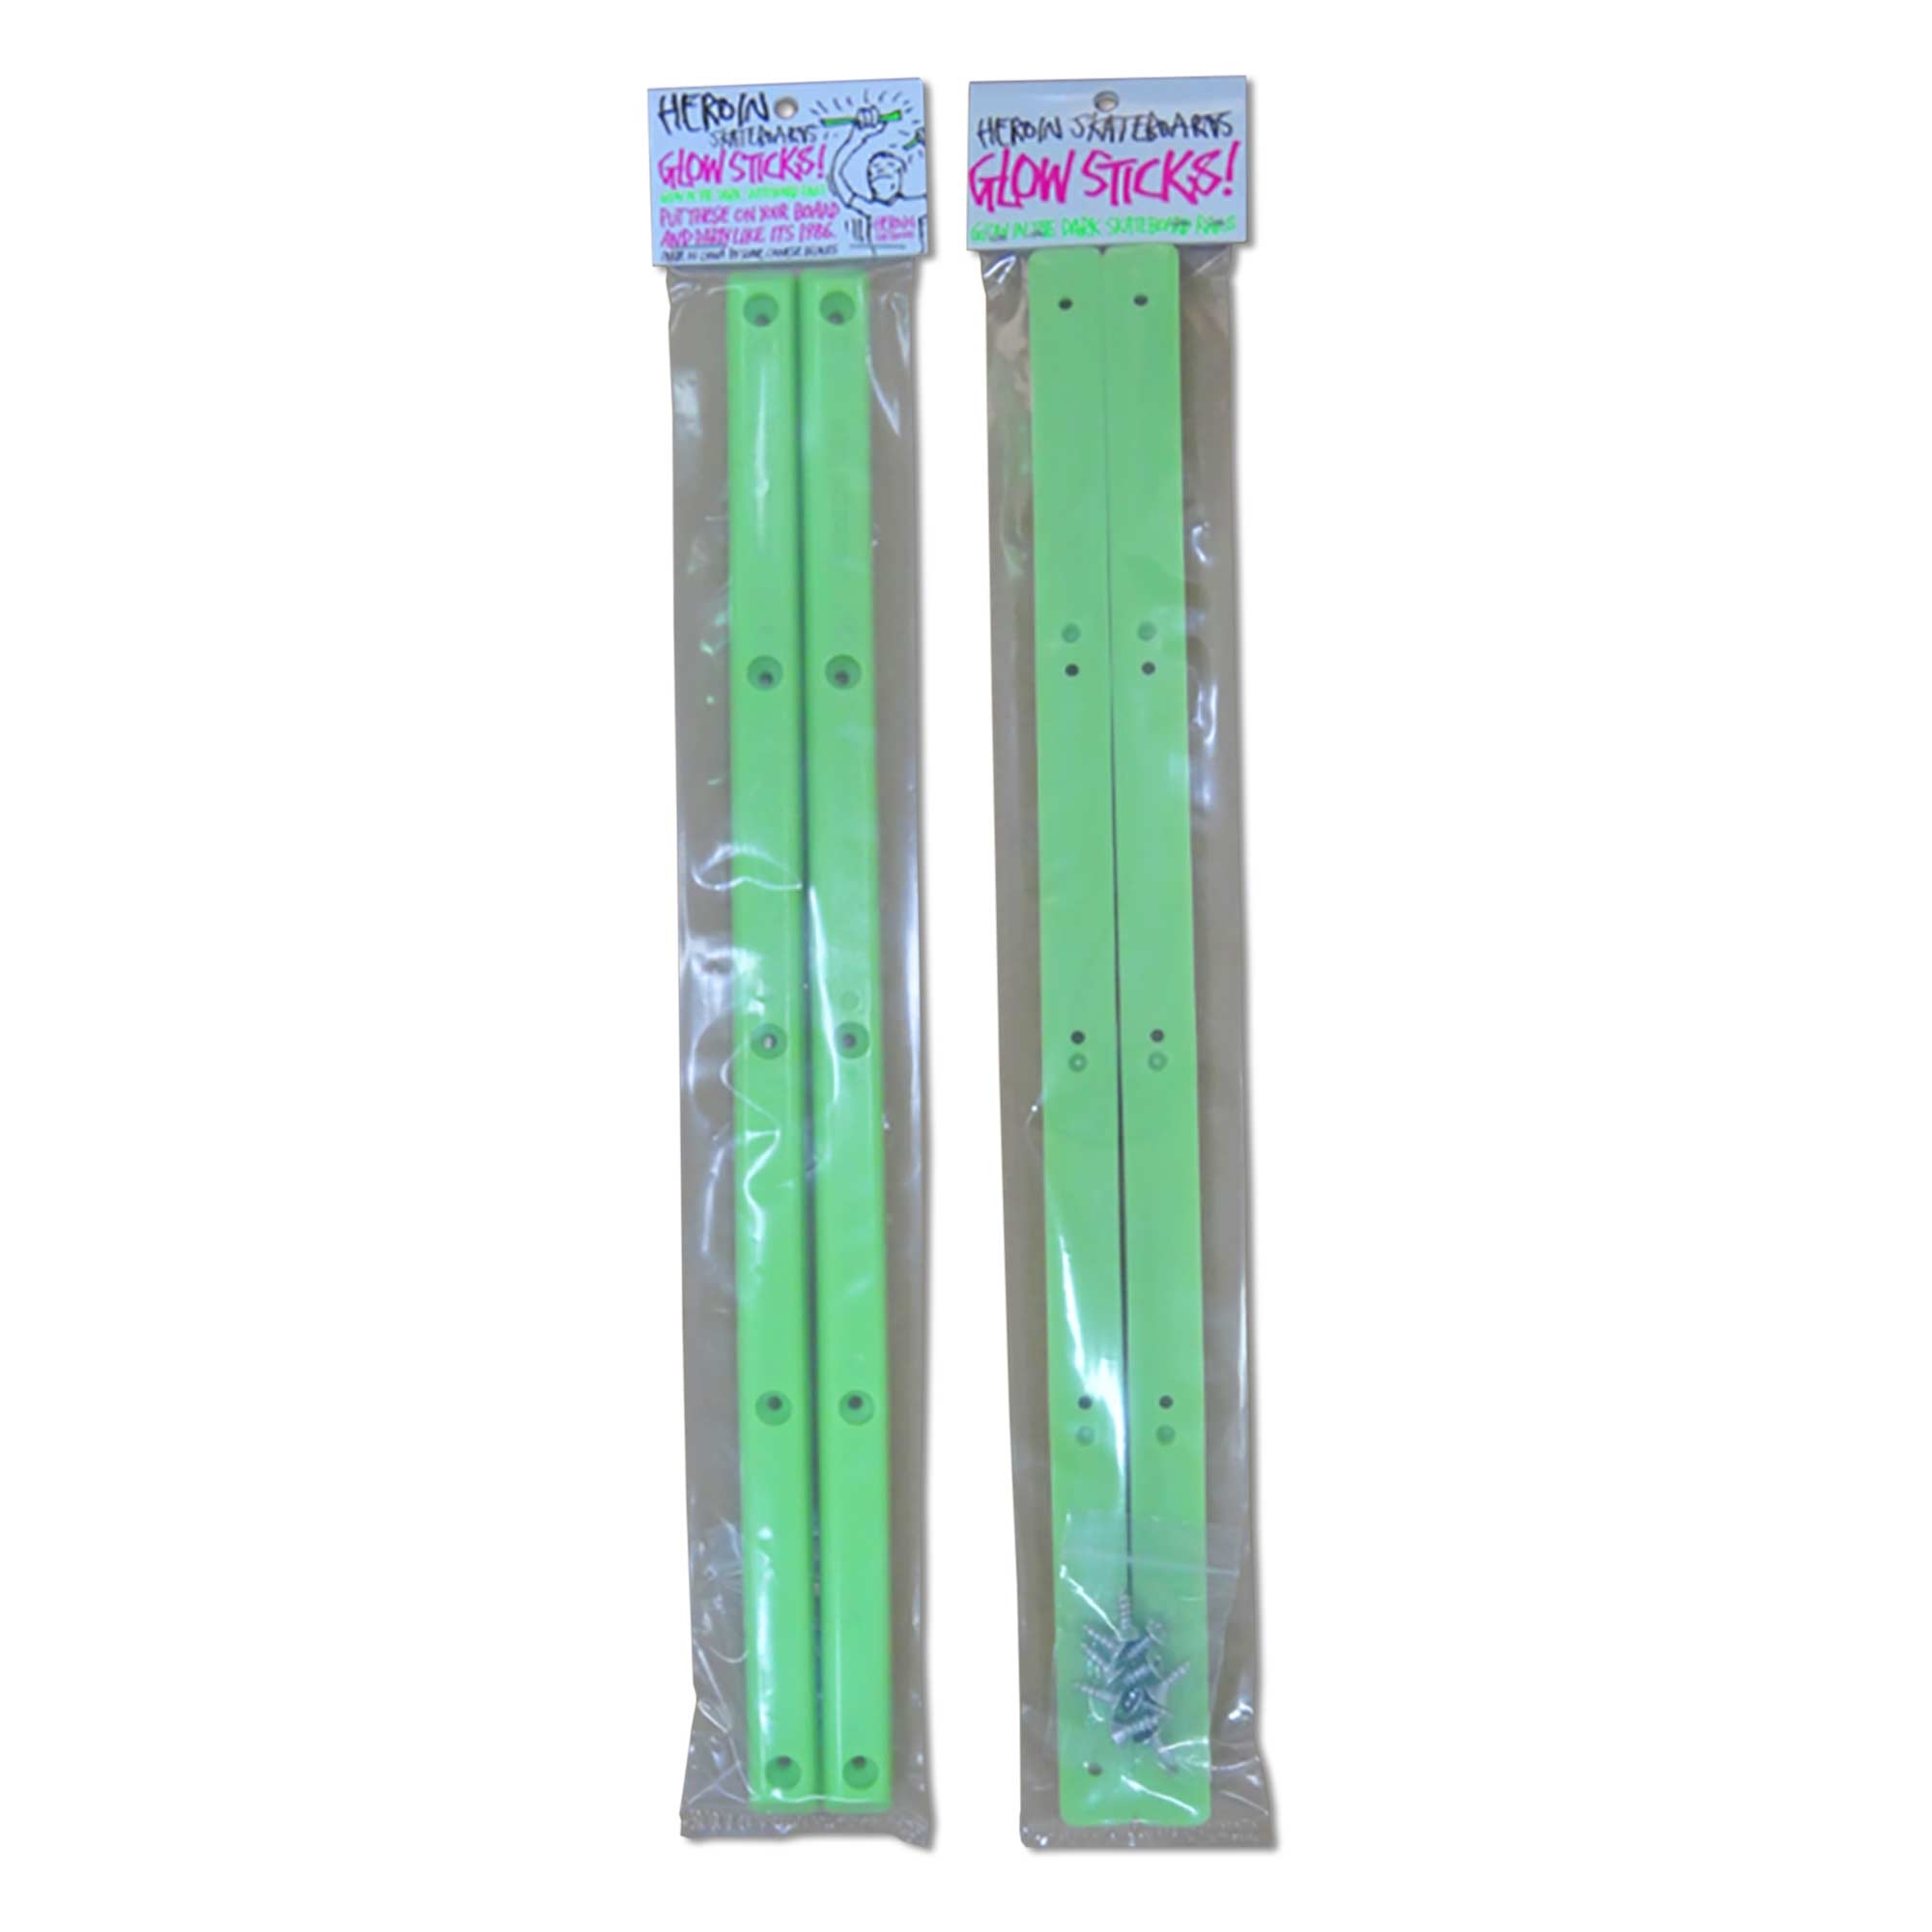 HEROIN Rails Glow Sticks, green/yellow -